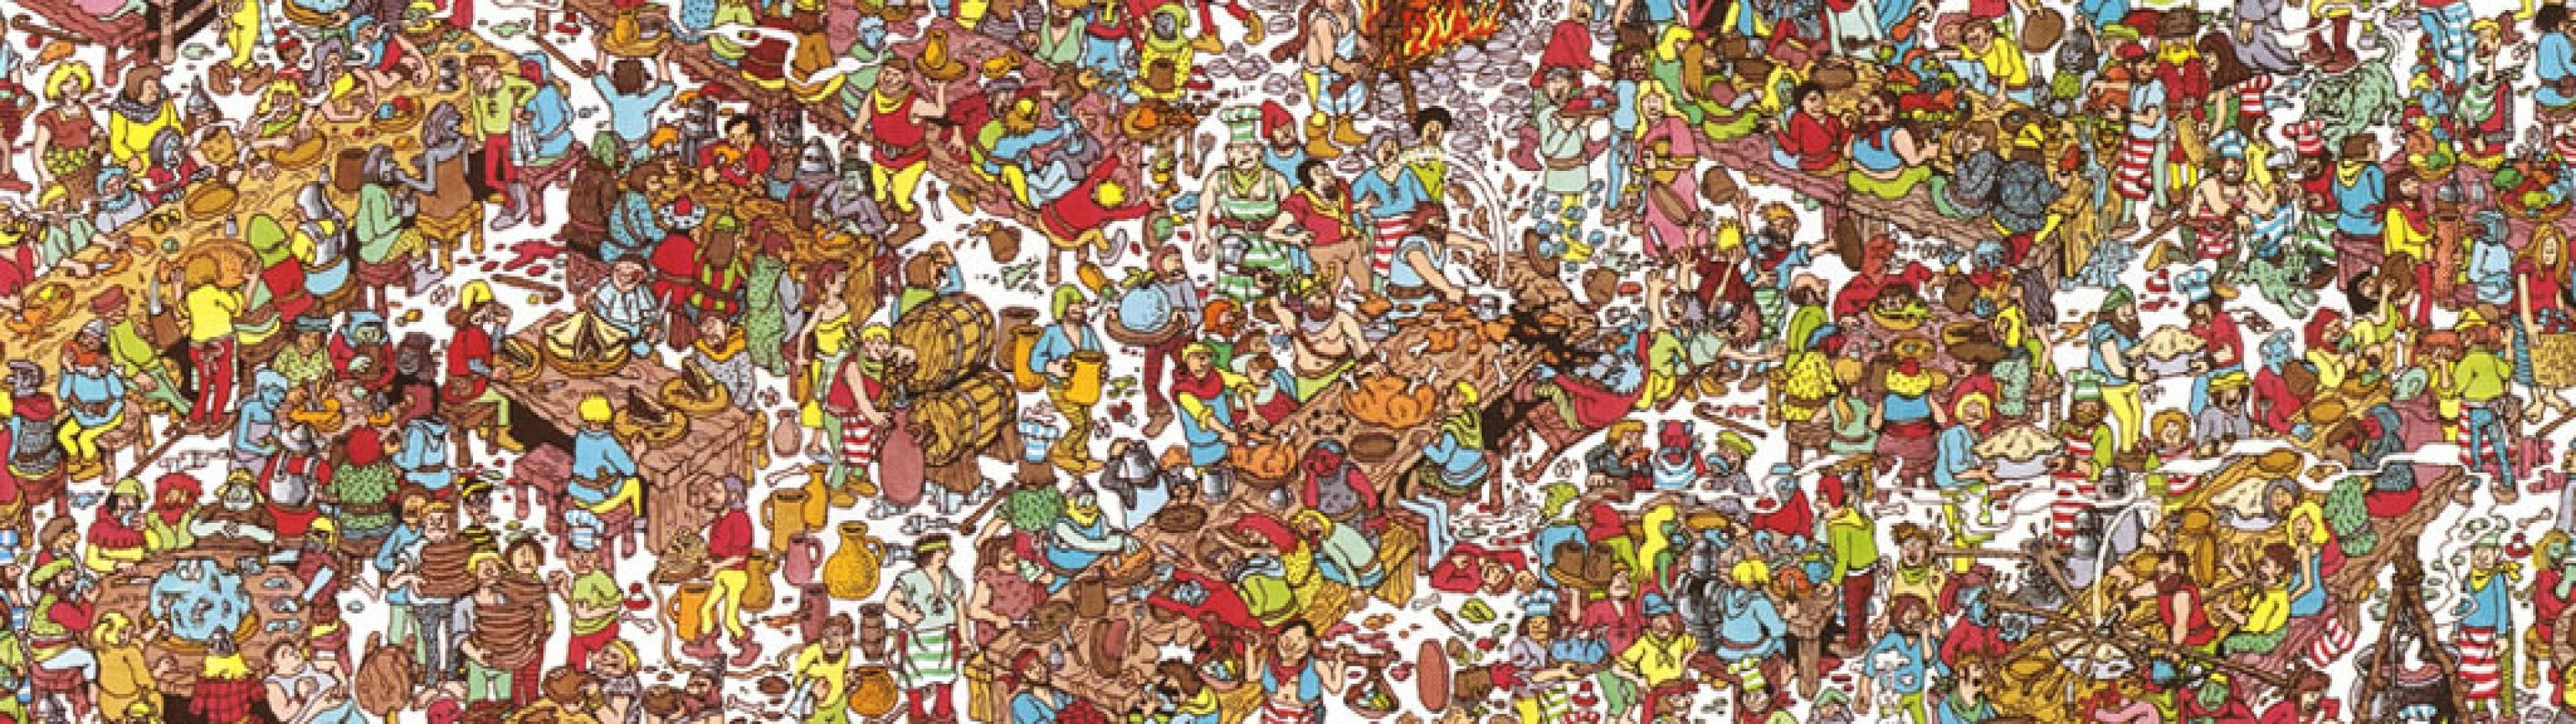 3840x1080 Where's Waldo Wallpapers Top Free Where's Waldo Backgrounds